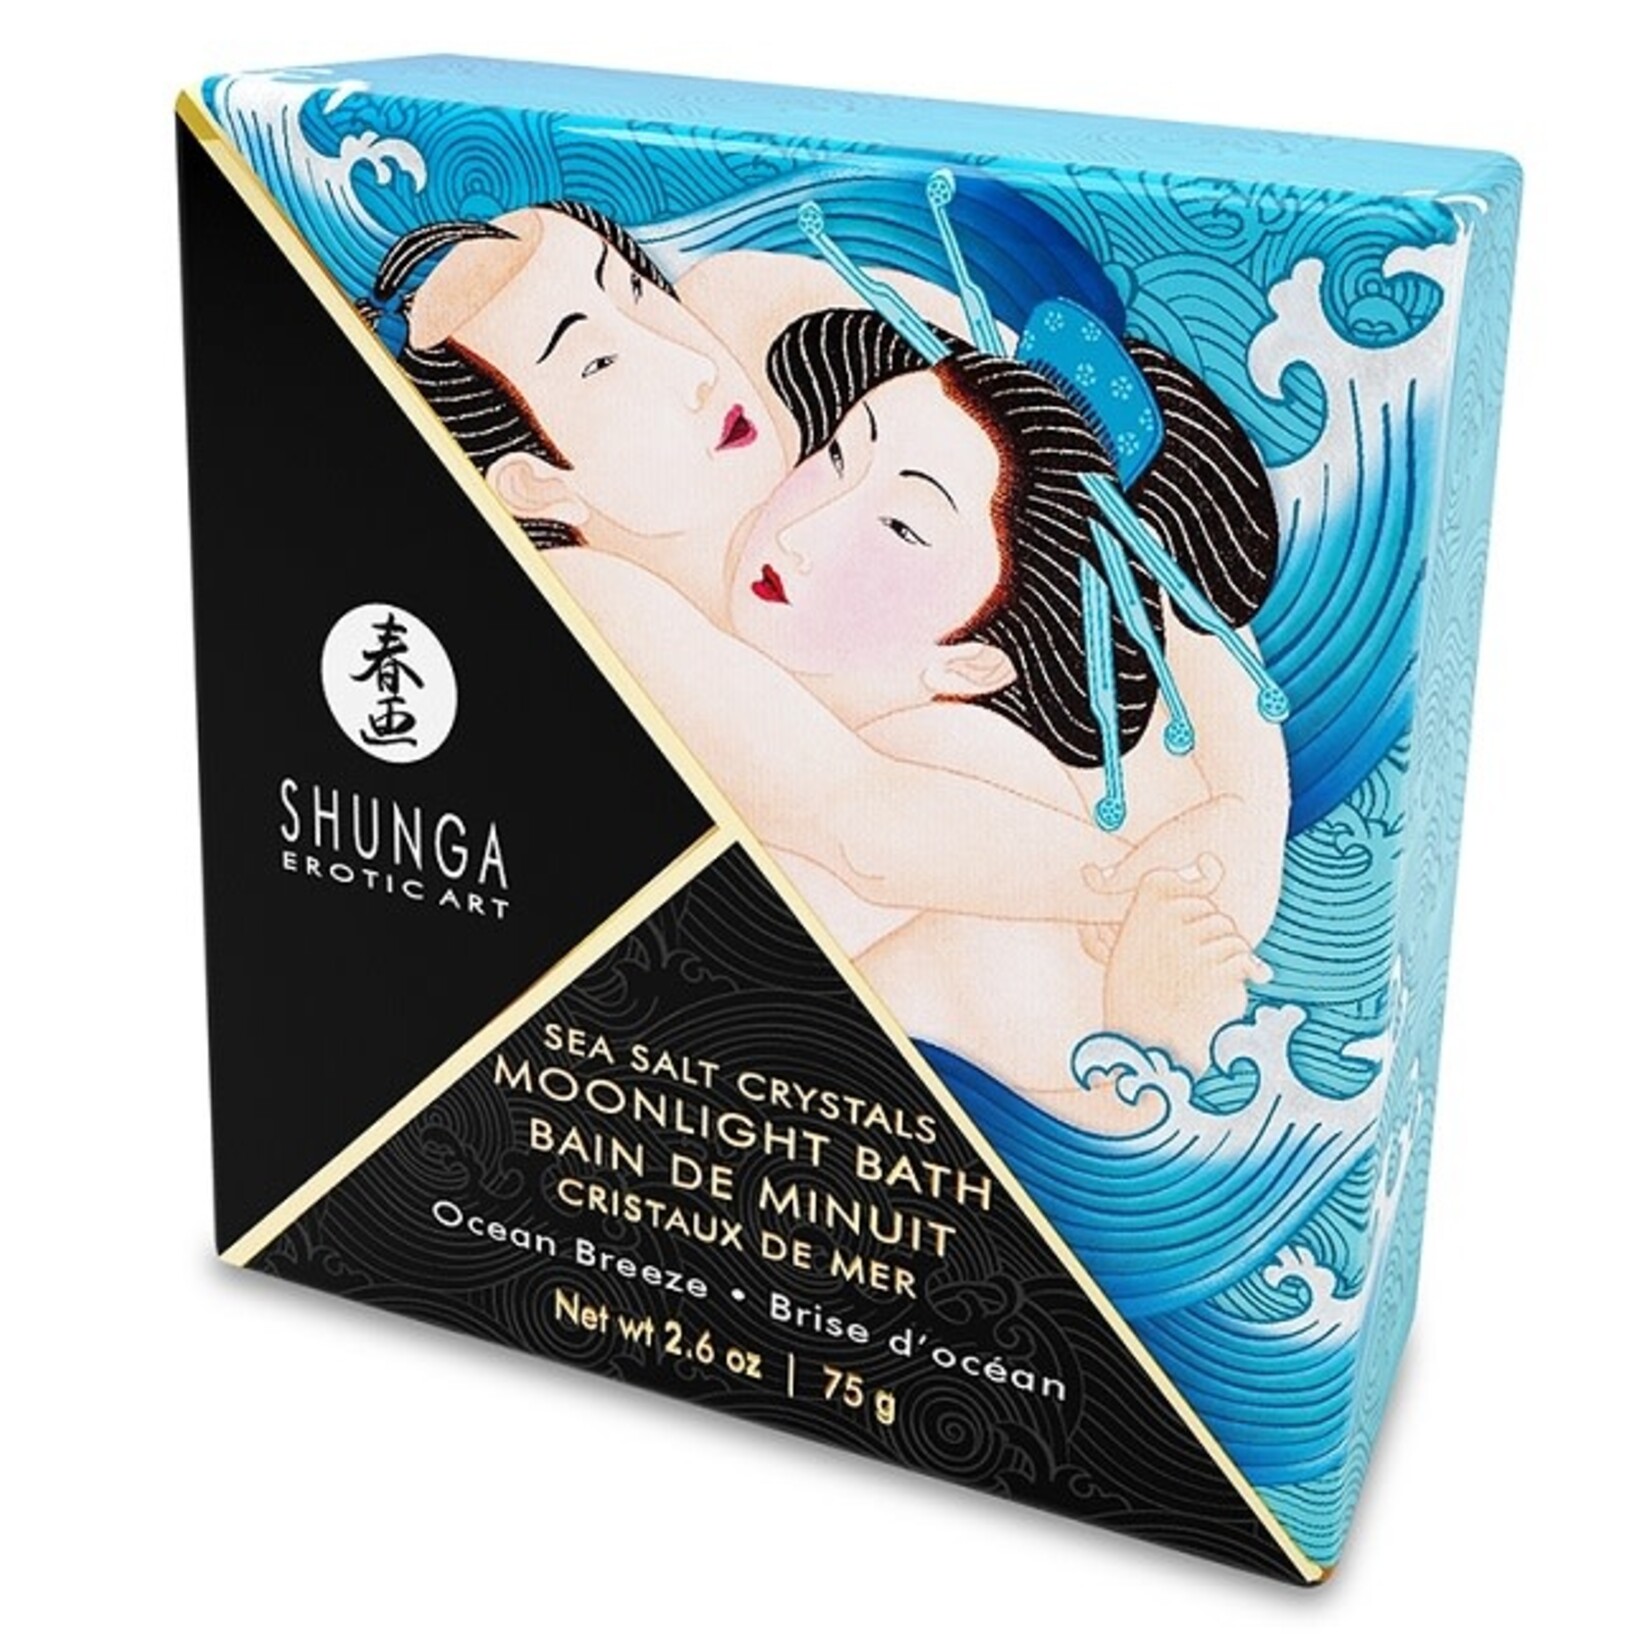 Shunga Erotic Art Shunga Moonlight Bath Sea Salt Crystals 75g